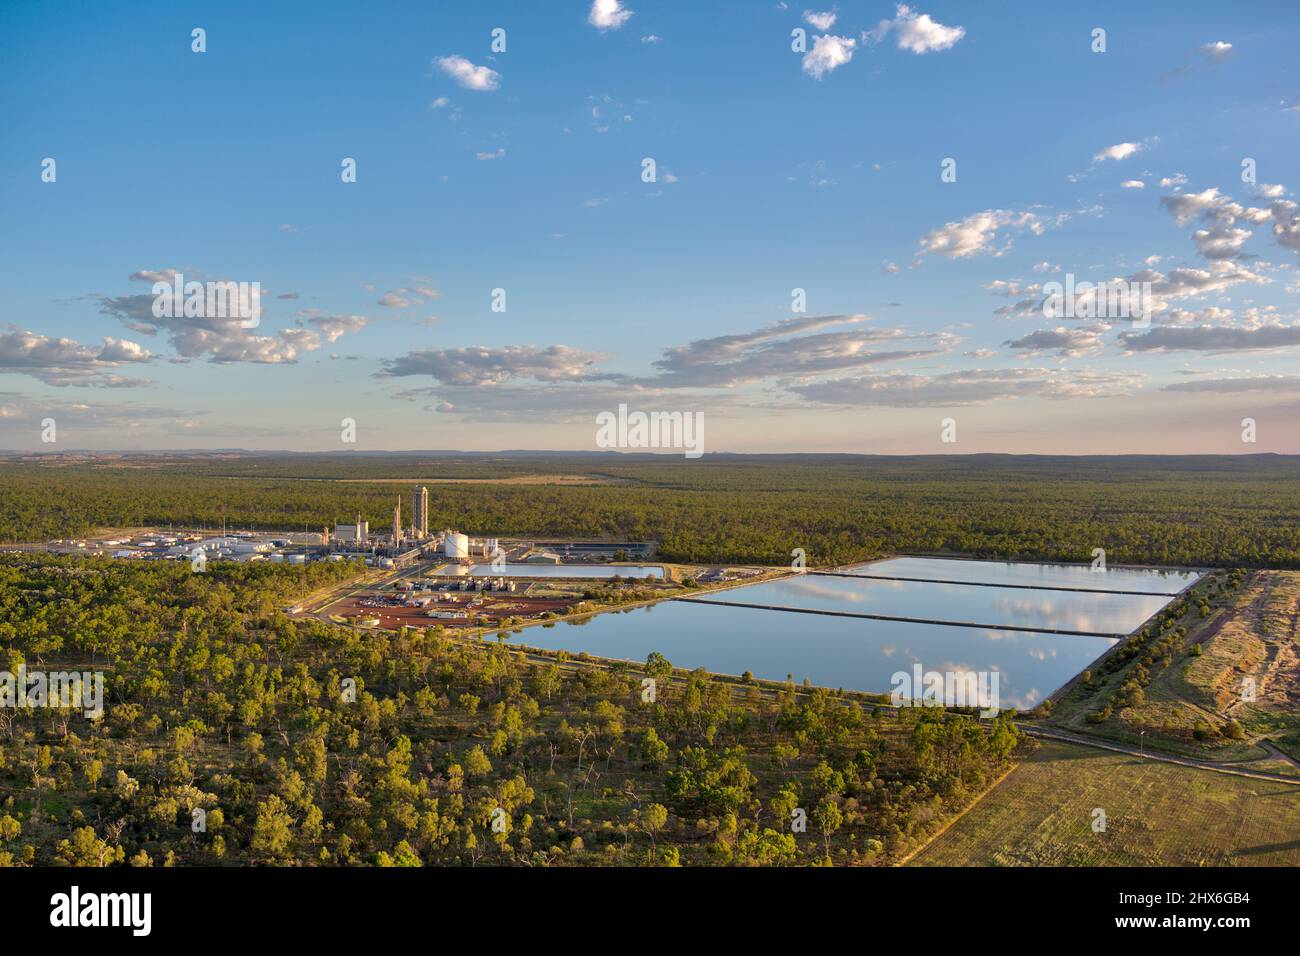 Aerial of the Dyno Nobel ammonium nitrate manufacturing factory site near Moranbah Queensland Australia Stock Photo